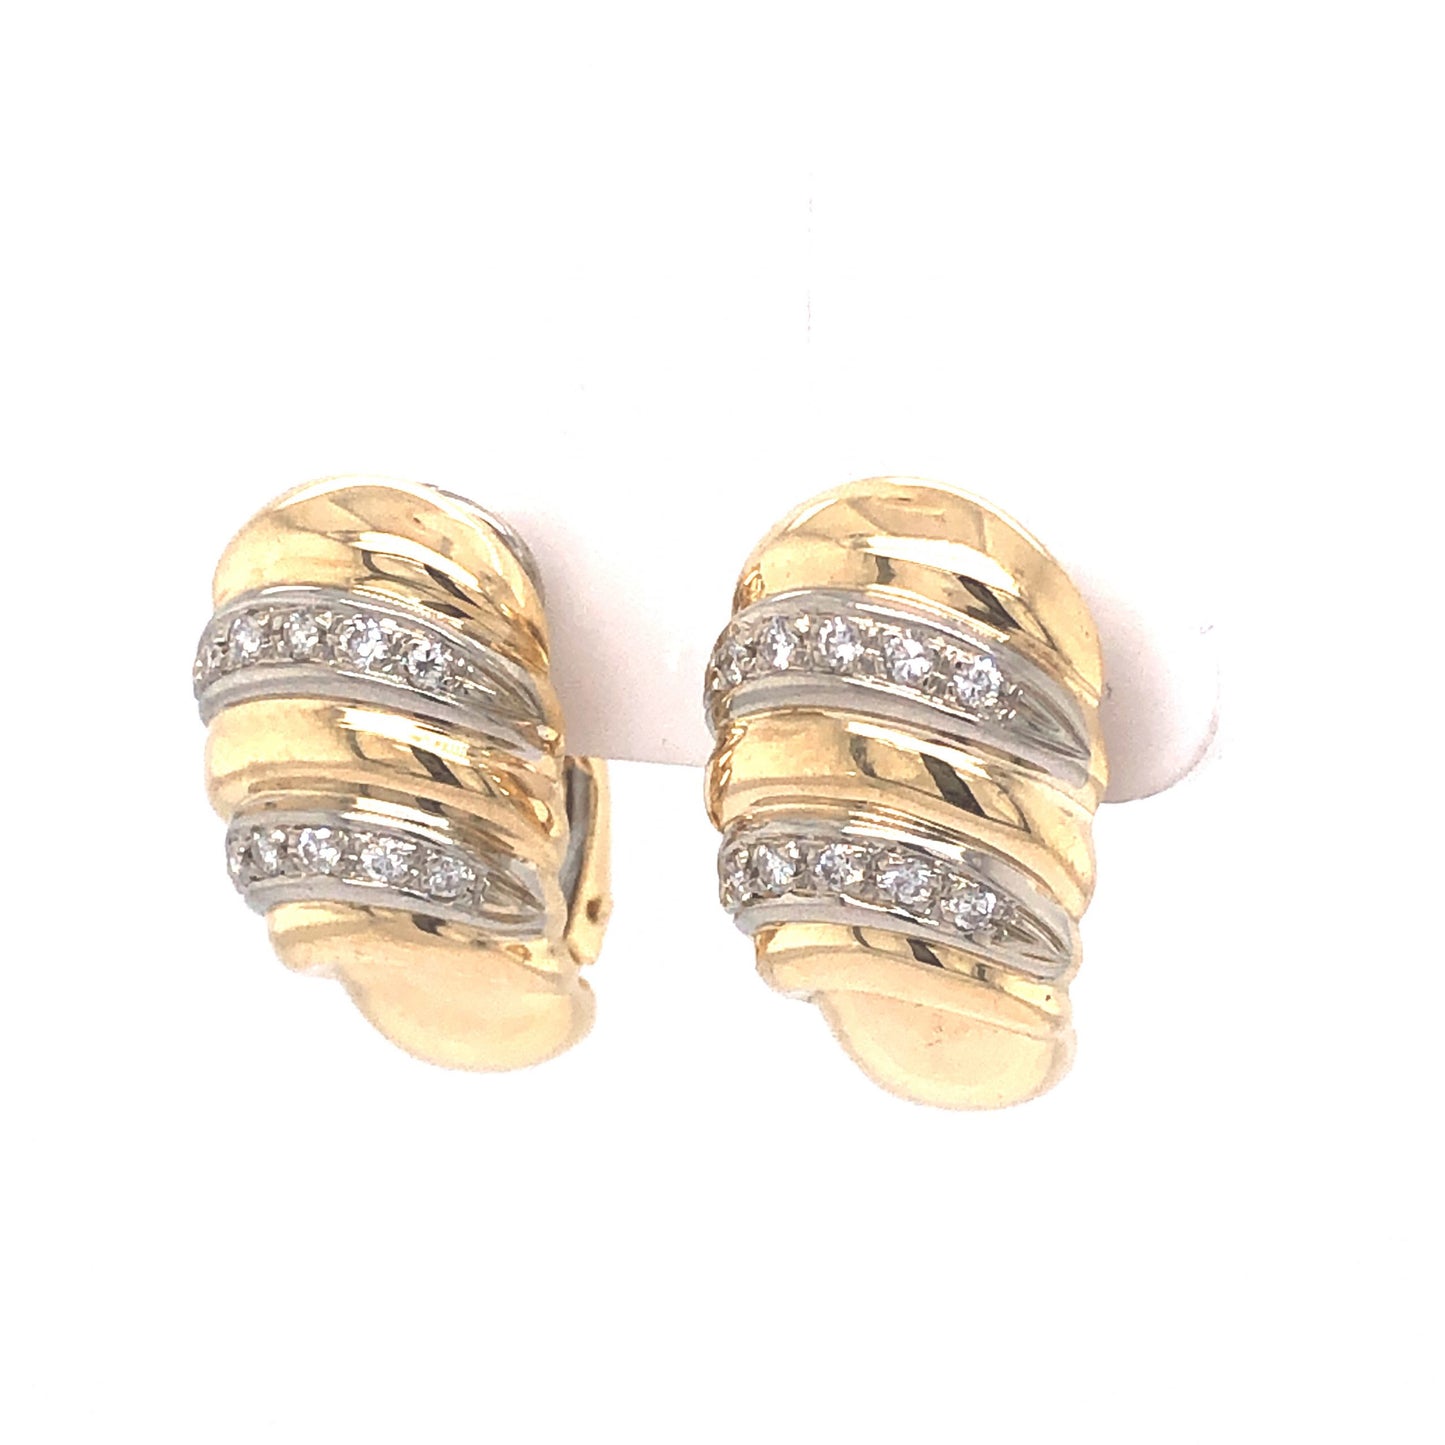 .20 Round Brilliant Cut Diamond Earrings in 18k Gold